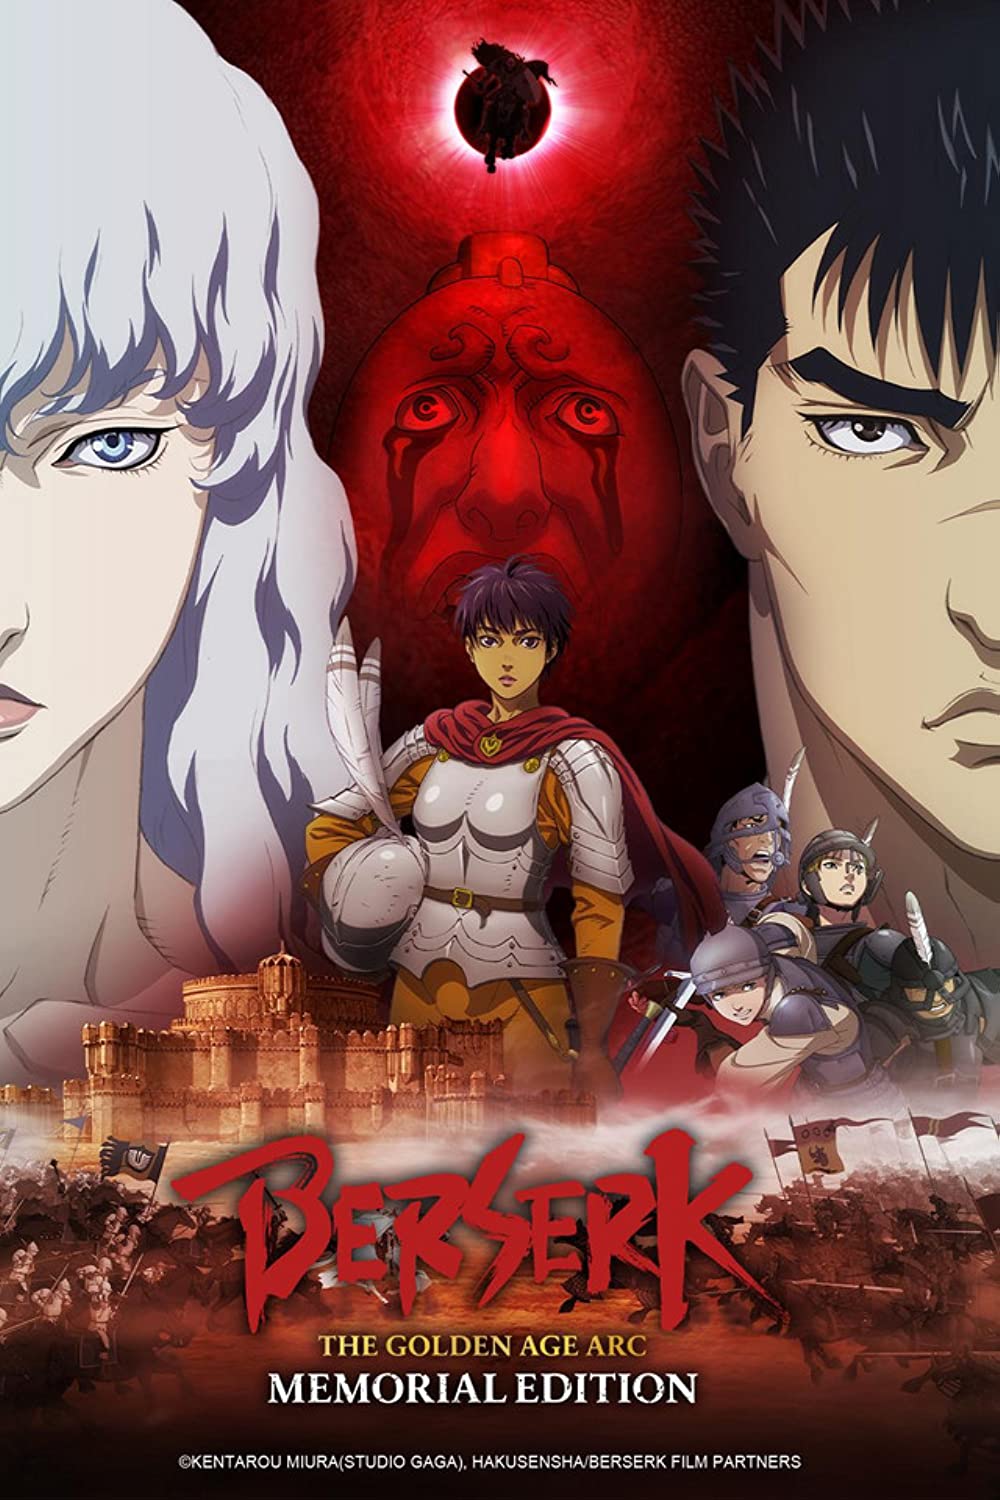 Berserk The Golden Age Arc  Memorial Edition  Anime VoiceOver Wiki   Fandom